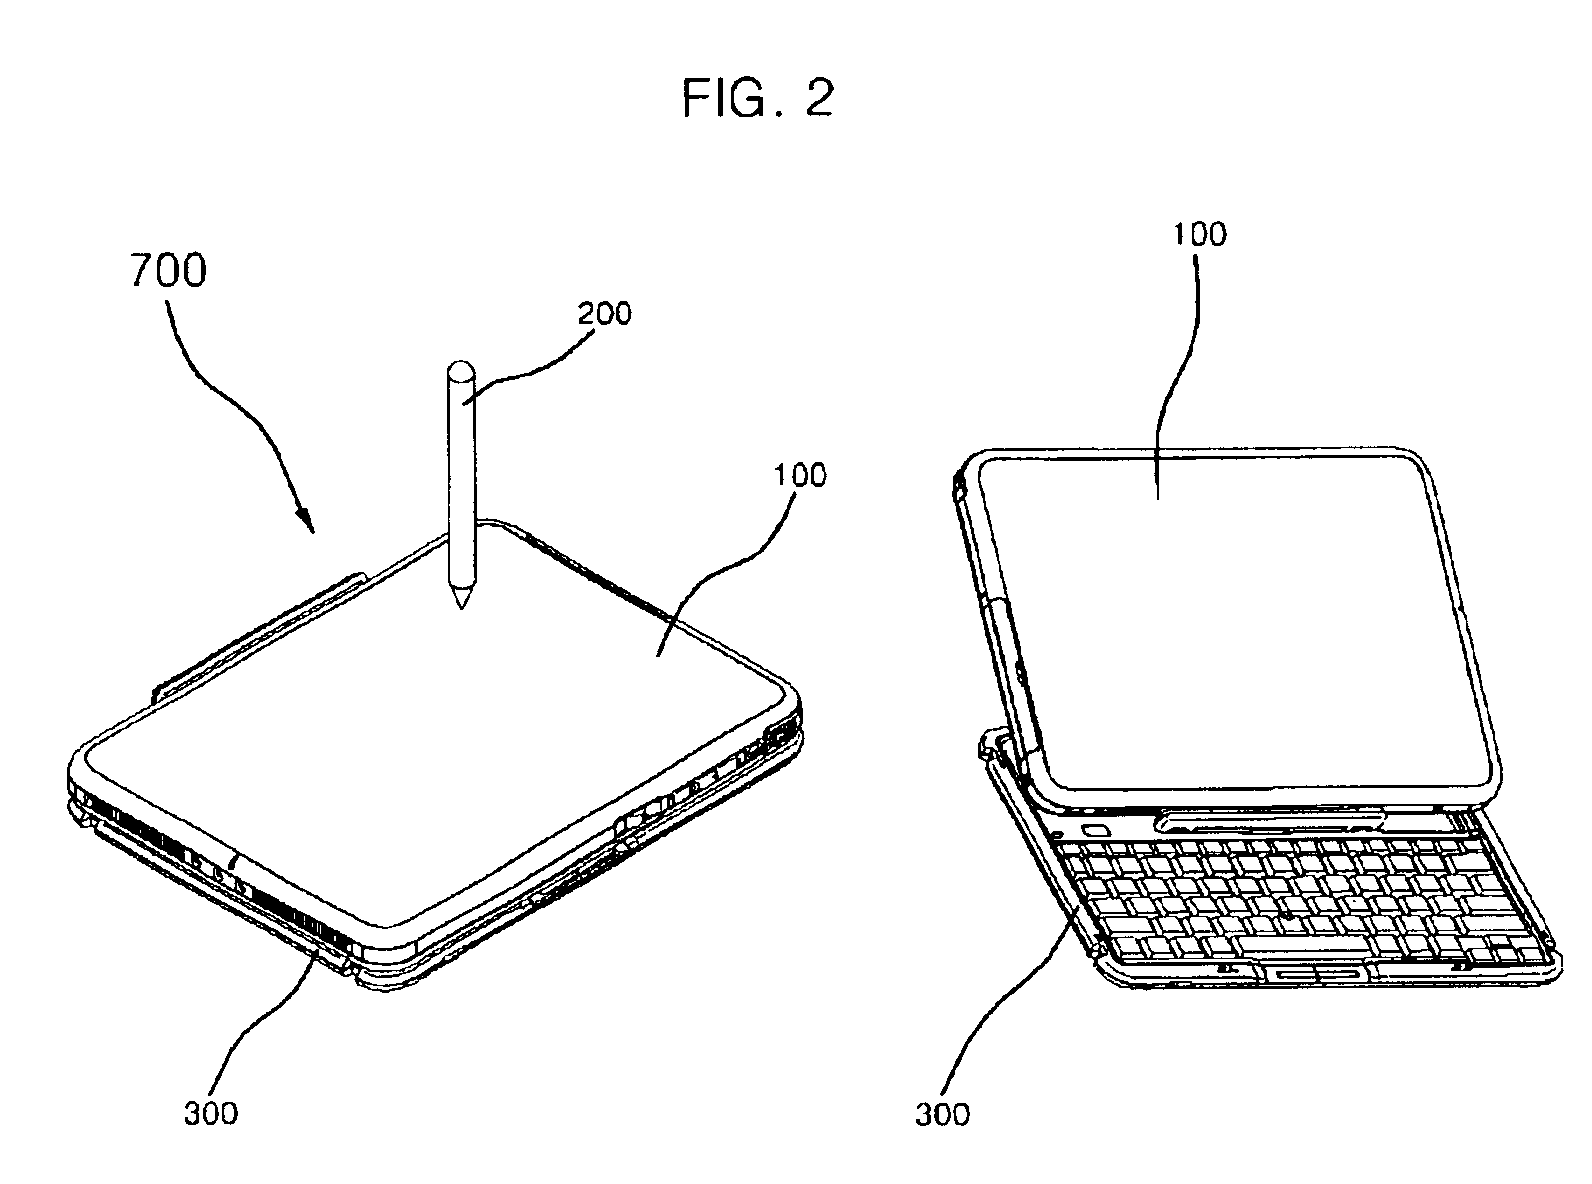 Portable computer and method